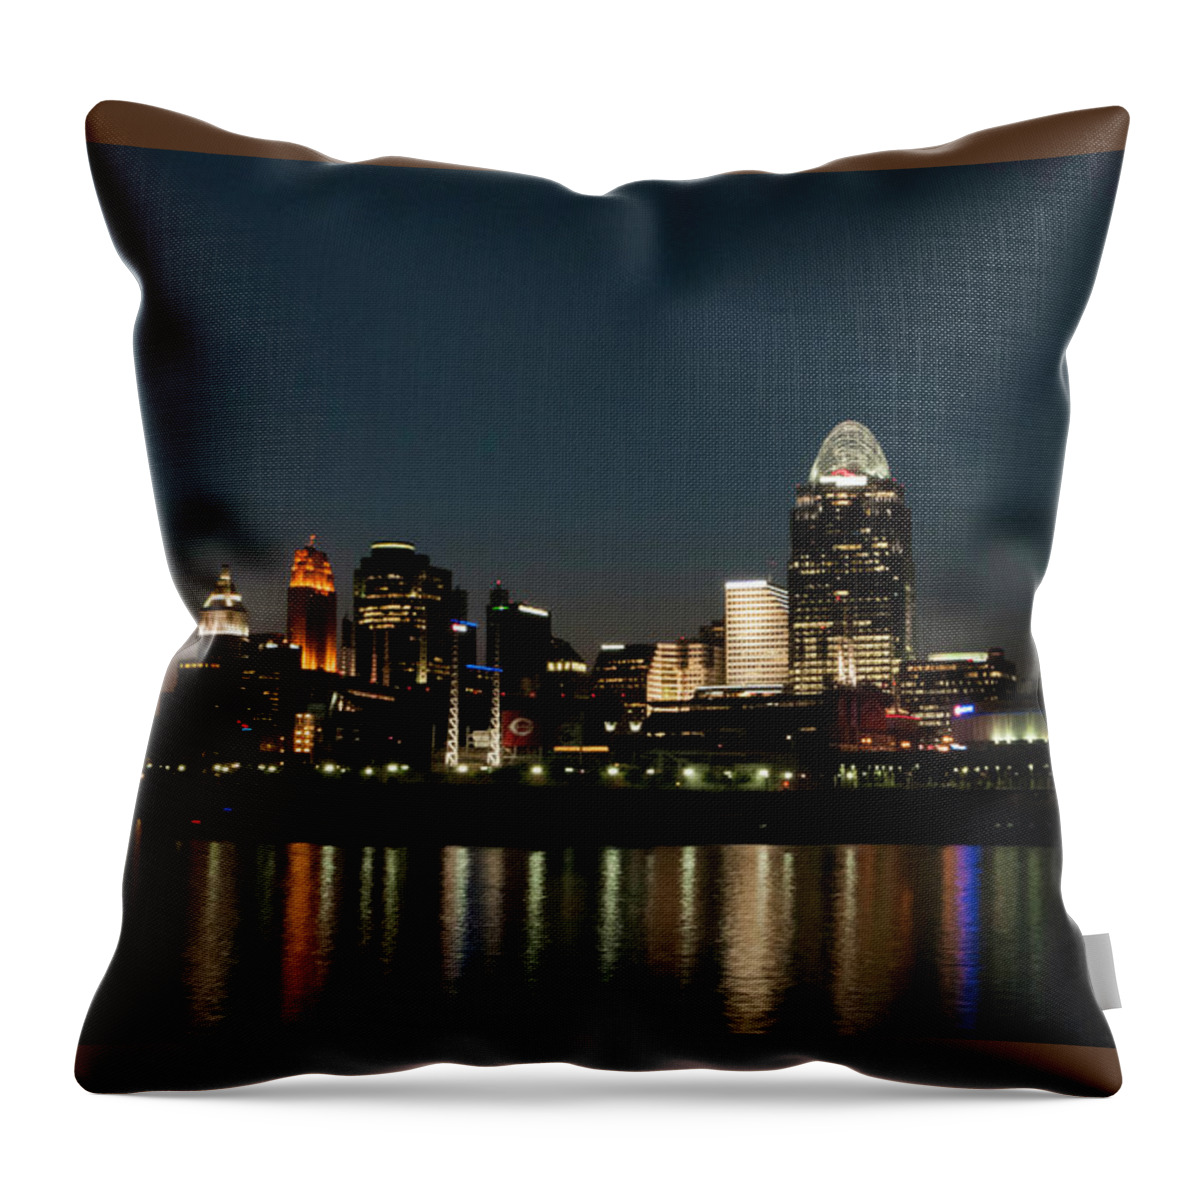 Cincinnati Skyline At Night Throw Pillow featuring the photograph Cincinnati Skyline at Night by Phyllis Taylor